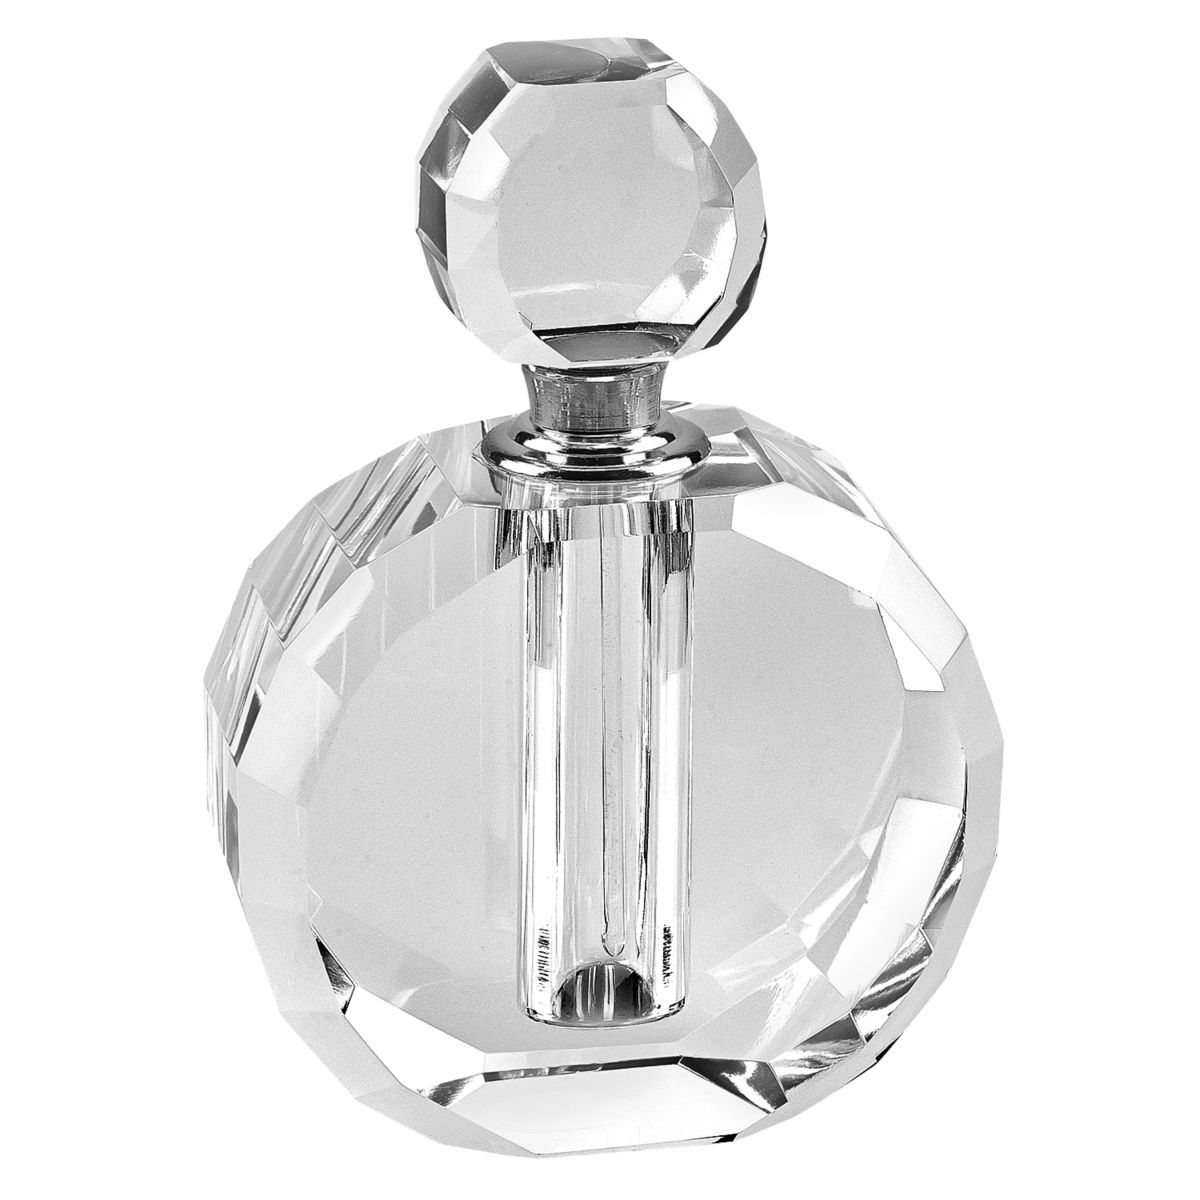 Enslz 100ml 3.4 oz Refillable Spray Perfume Bottles large cosmetic